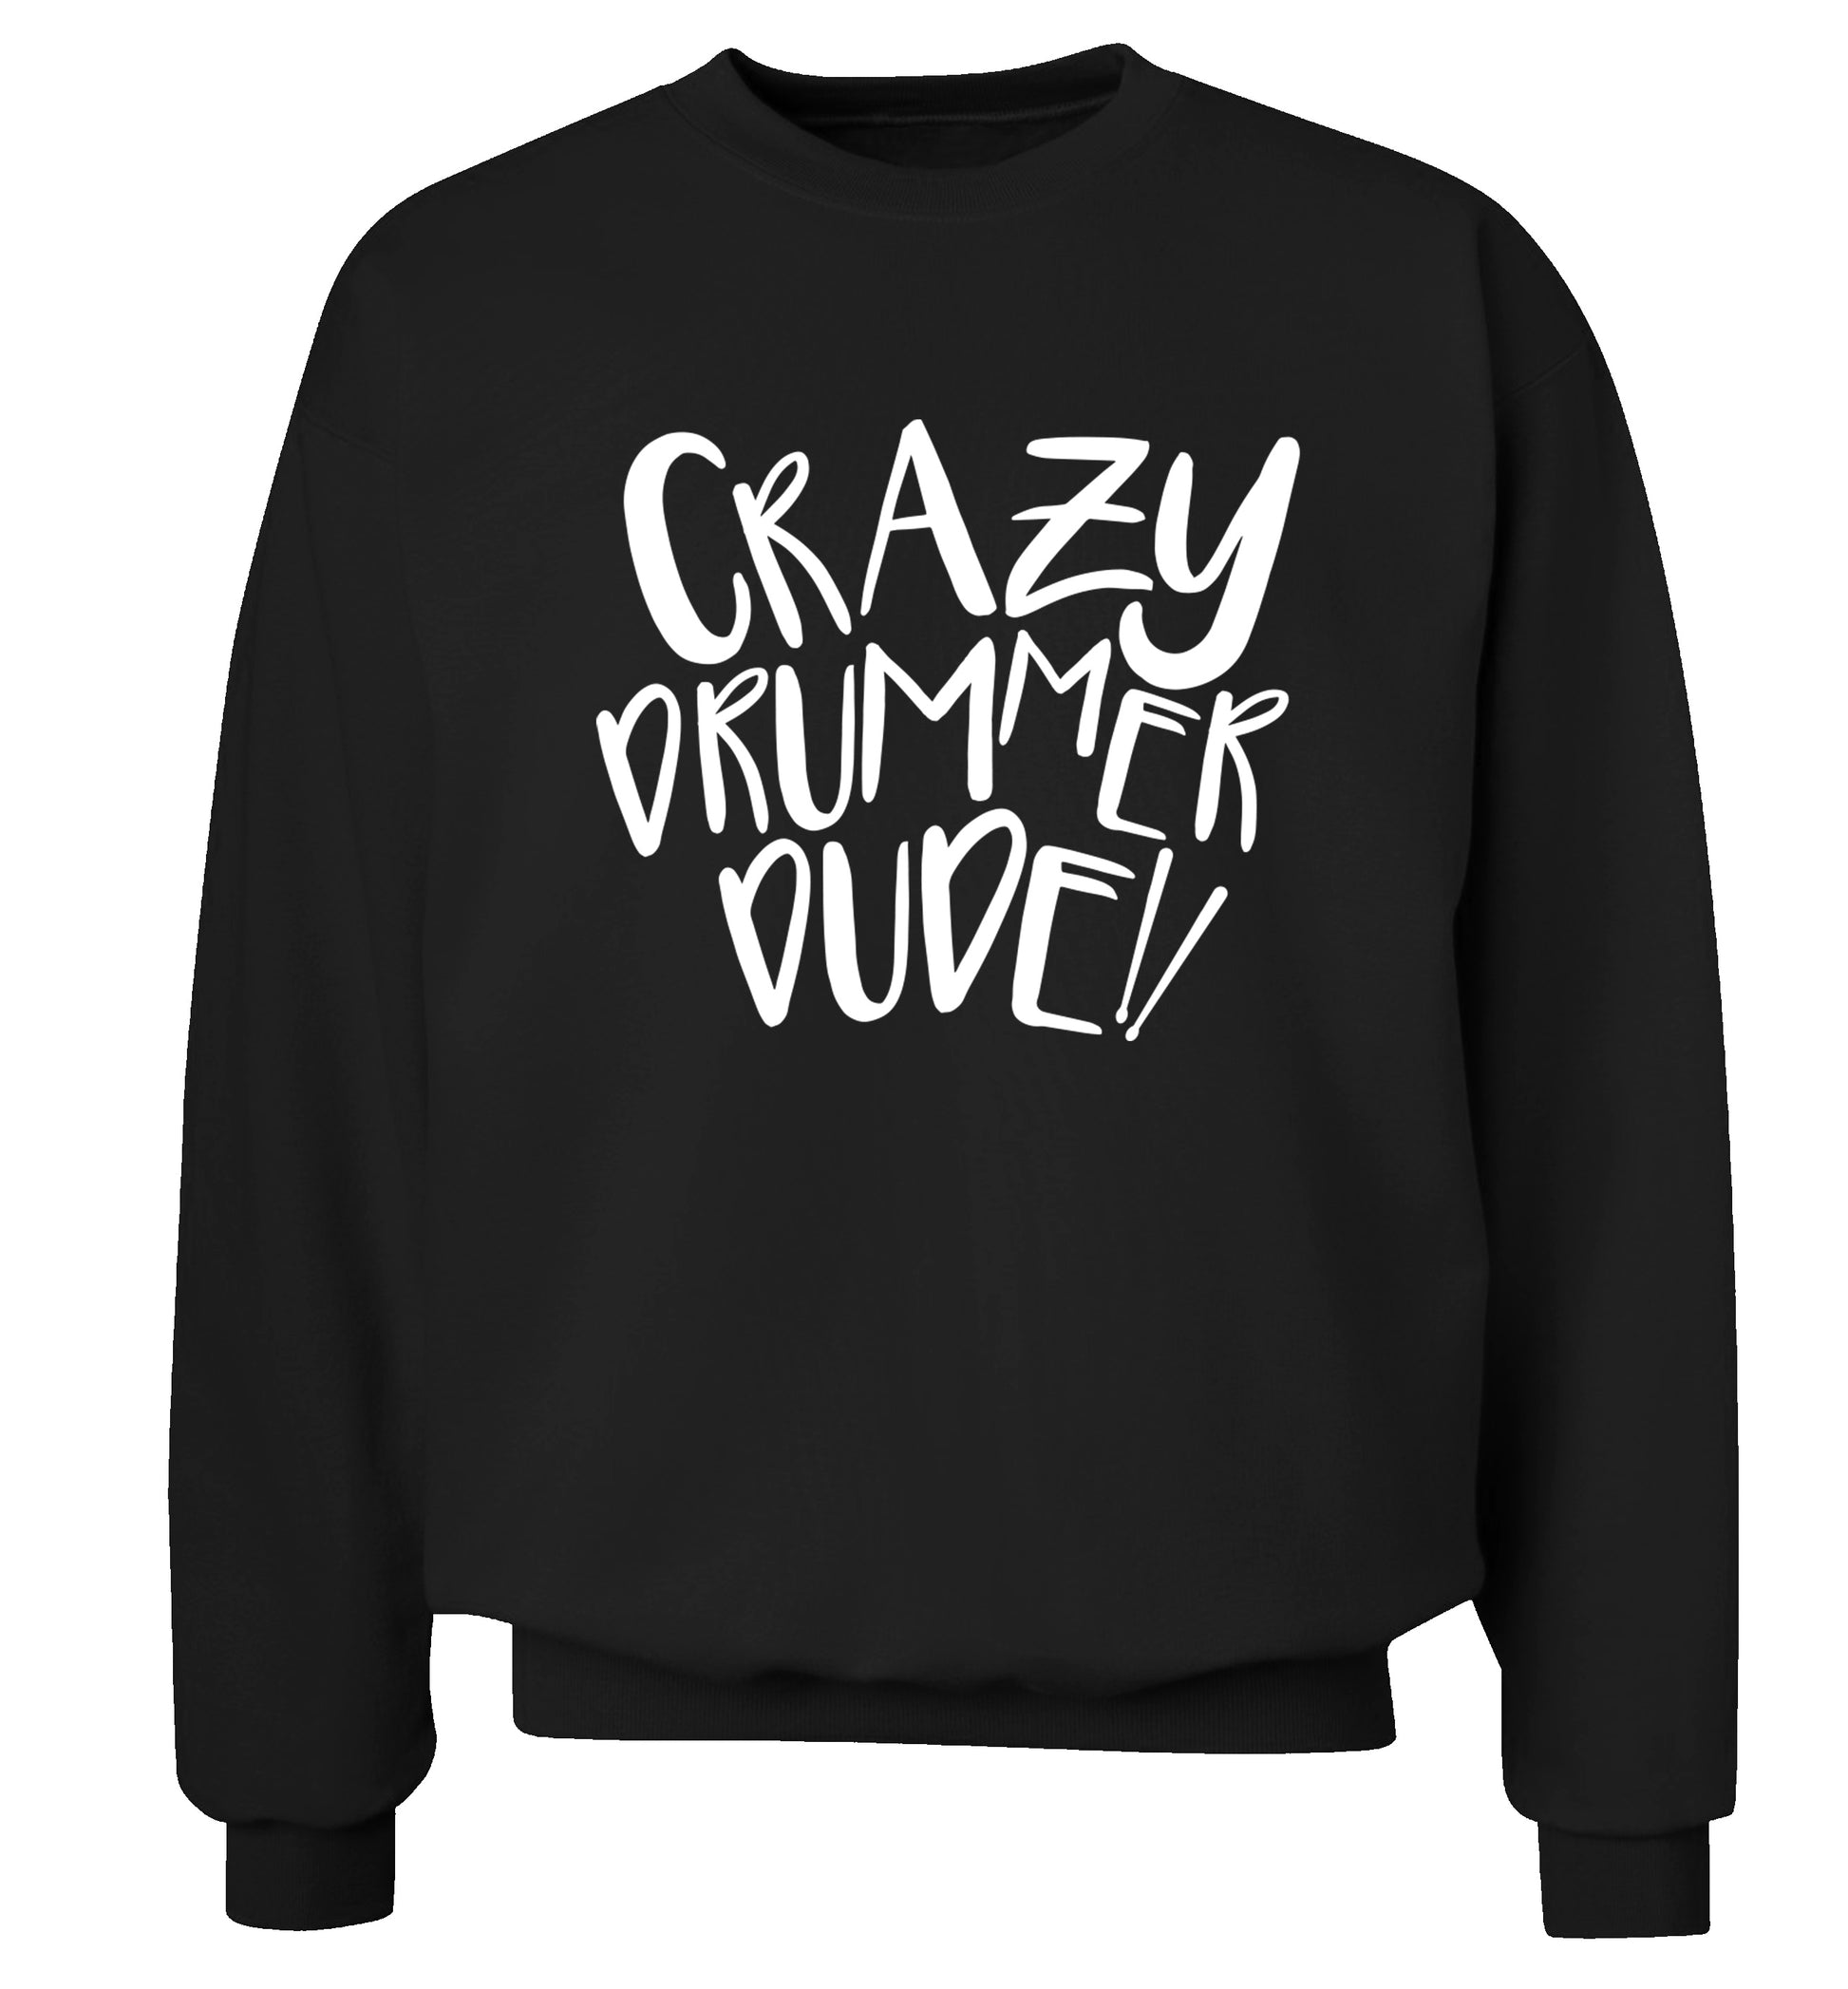 Crazy drummer dude Adult's unisex black Sweater 2XL